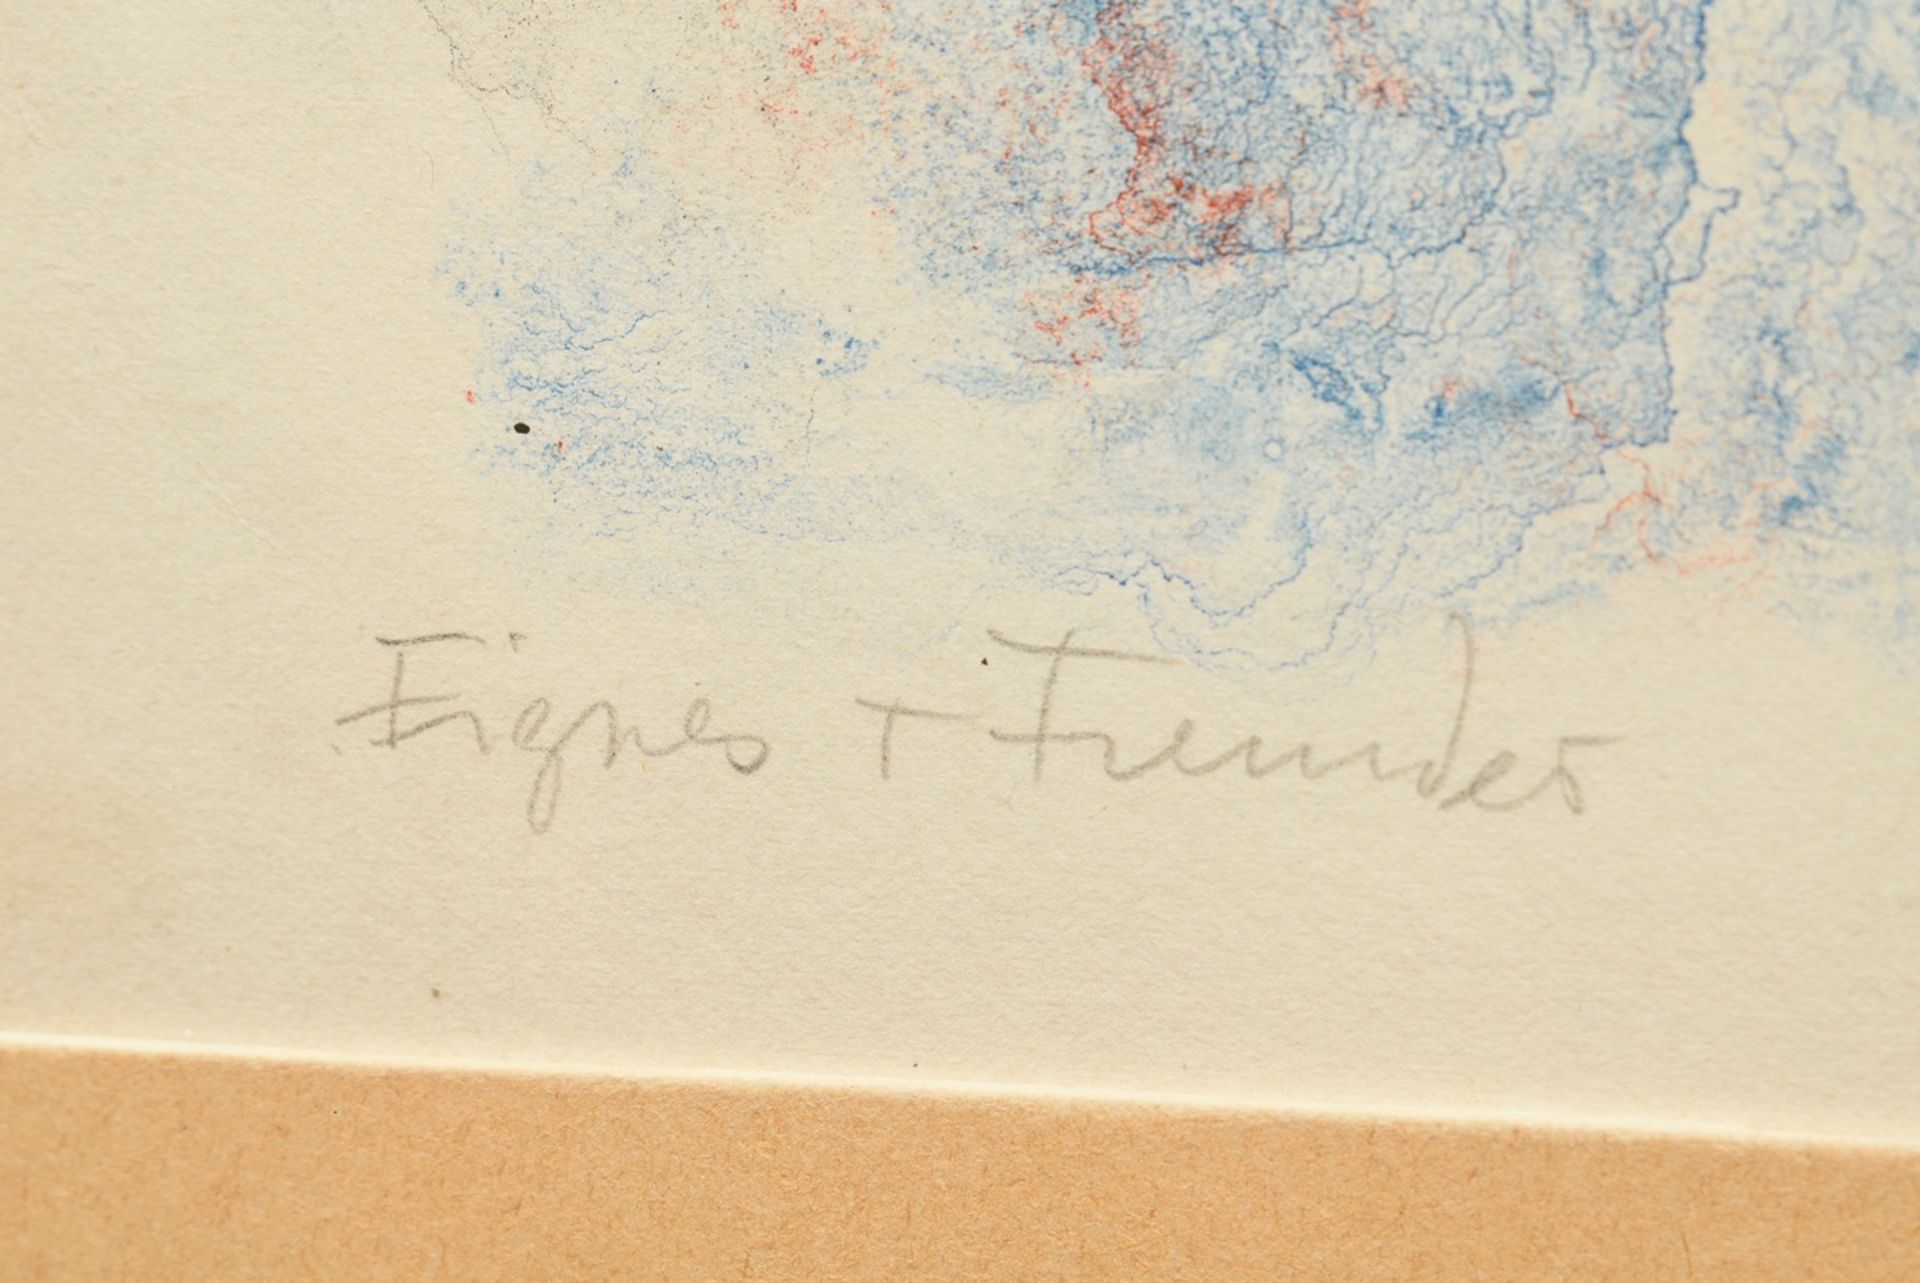 Fiedler, Arnold (1900-1985) ‘Eigenes + Fremdes’ 1960, colour lithograph, e.a./proof, a. sign./dat./ - Image 3 of 5